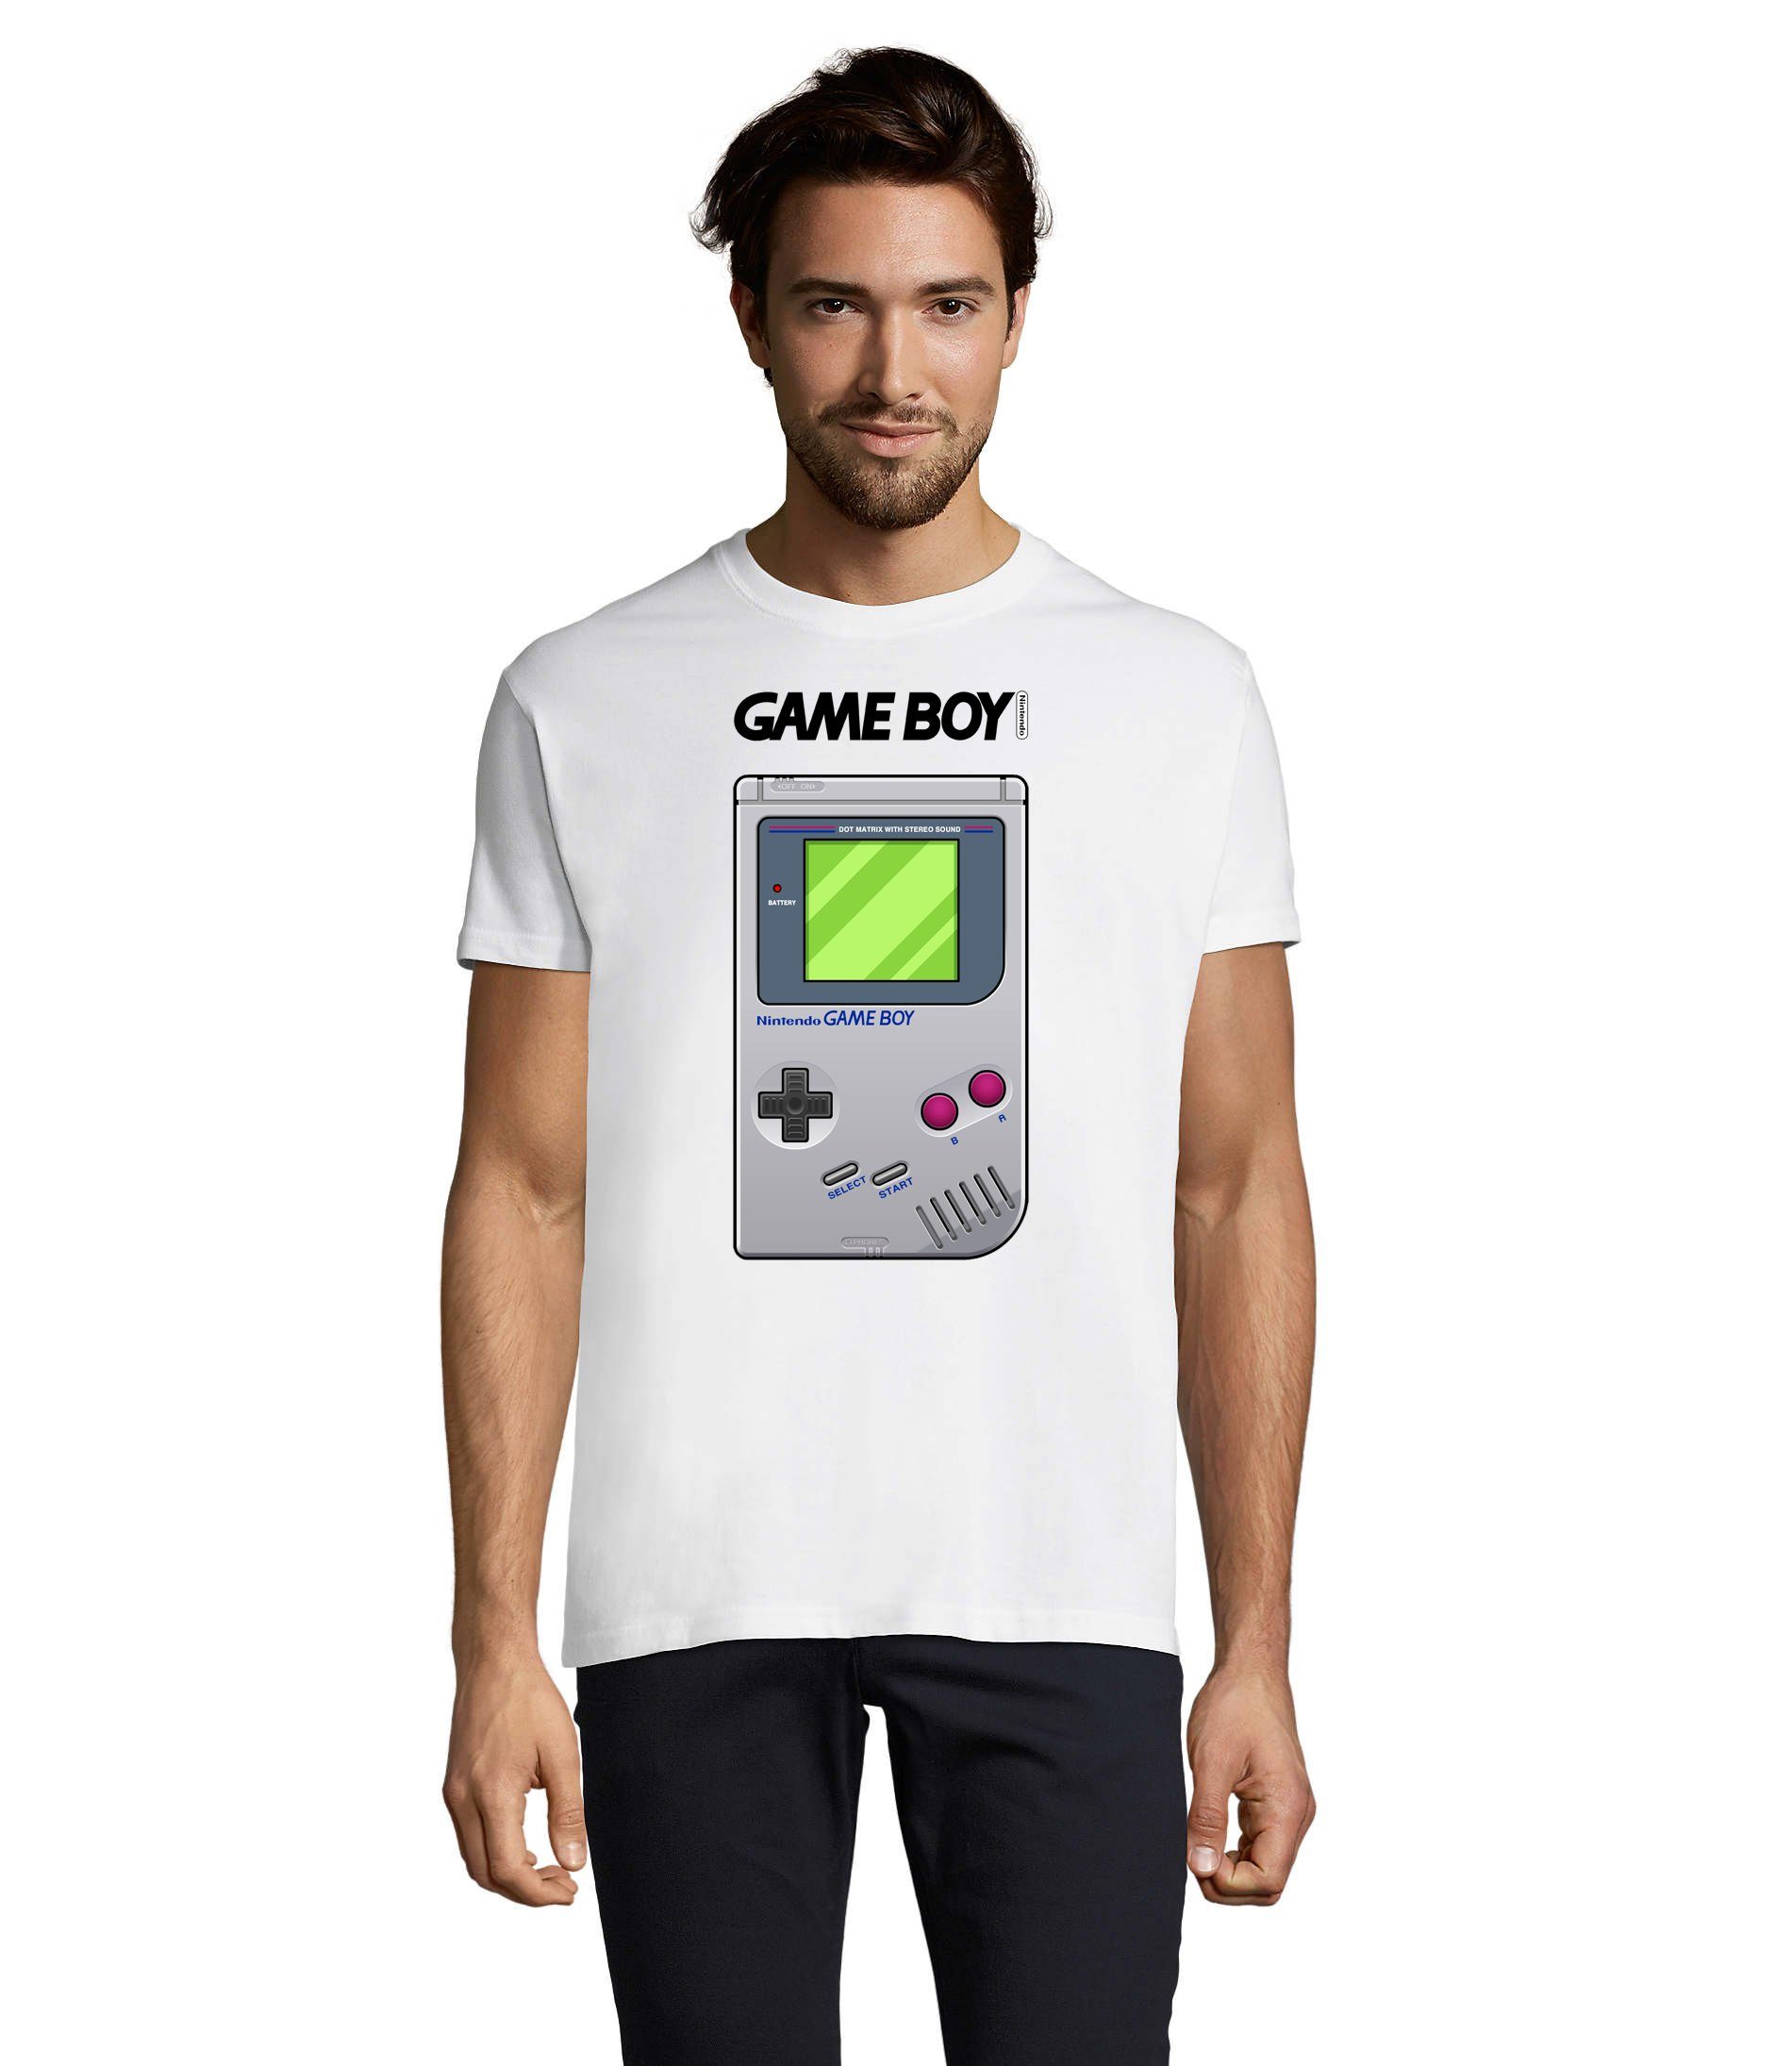 Retro T-Shirt & Brownie Gaming Boy Game Weiss Herren Gamer Blondie Konsole Nintendo